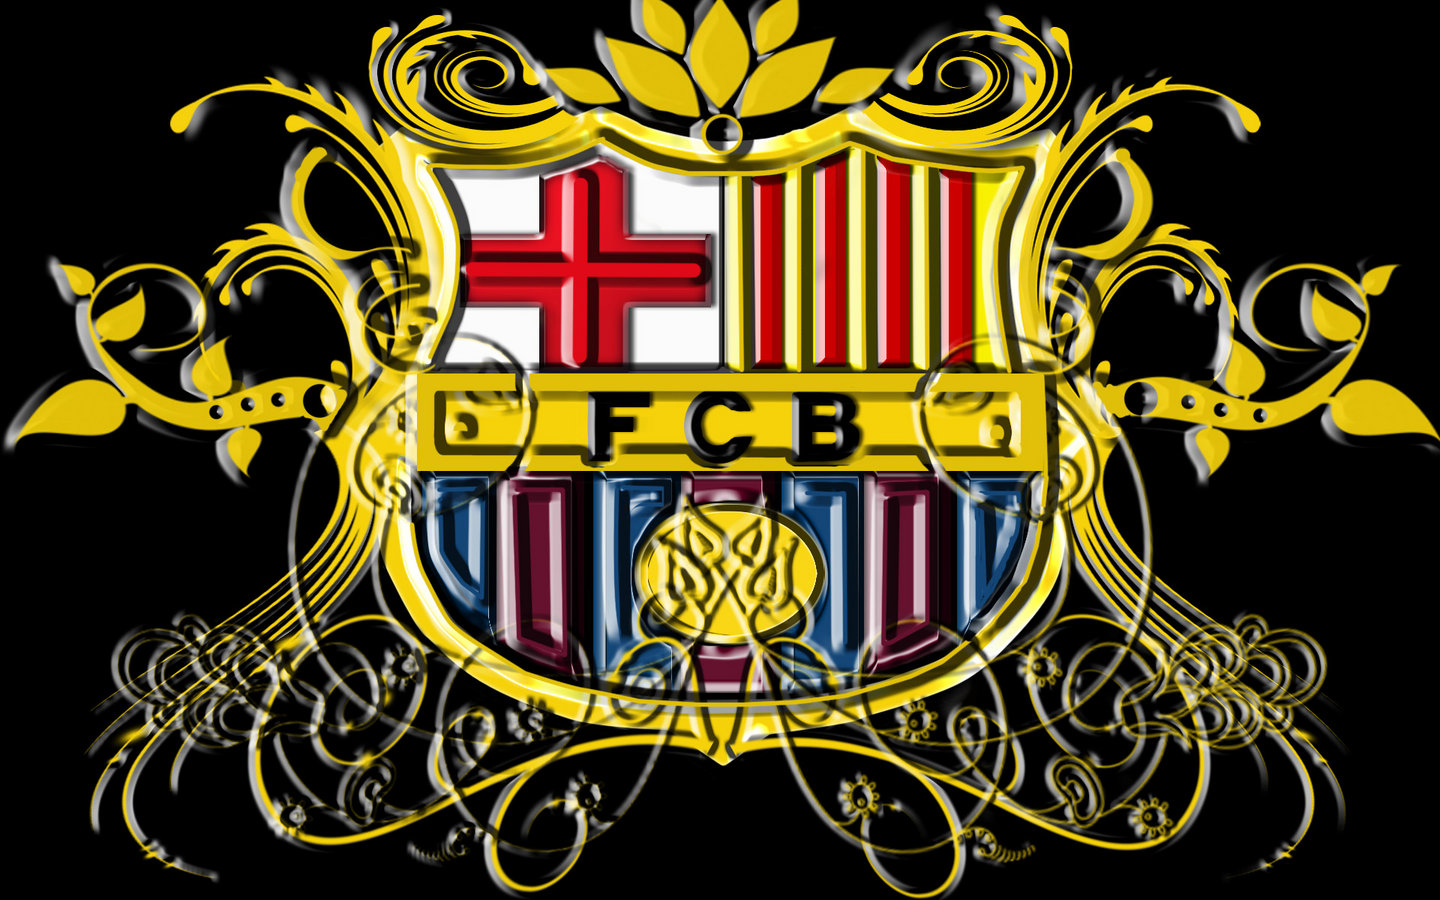 Wallpaper Fc Barcelona Logo Image Of Catalan Club